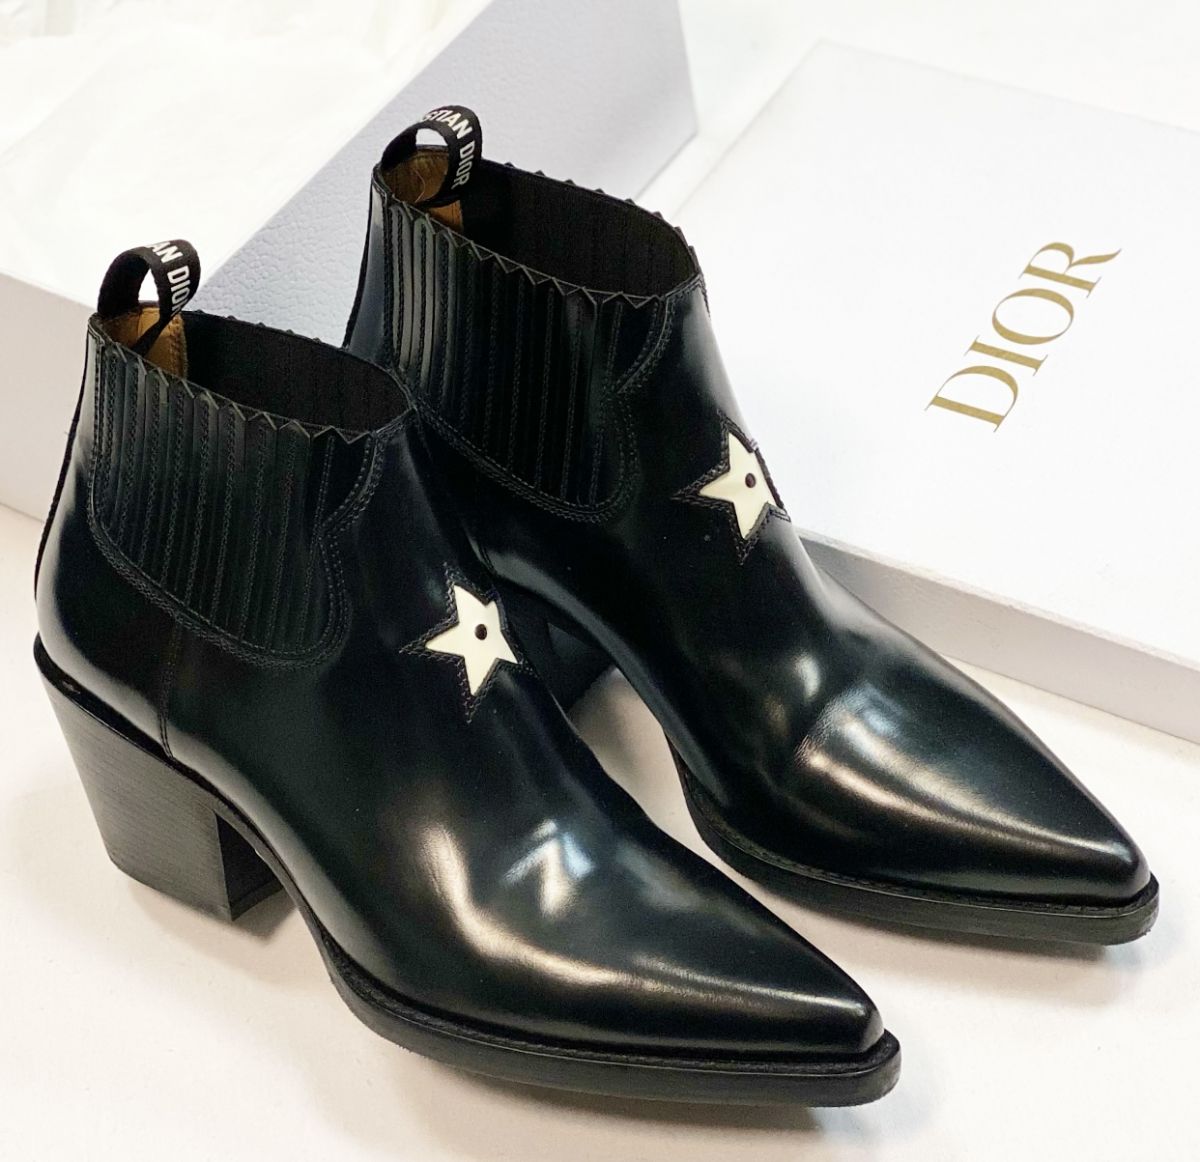 Ботинки Christian Dior размер 39 цена 46 155 руб 